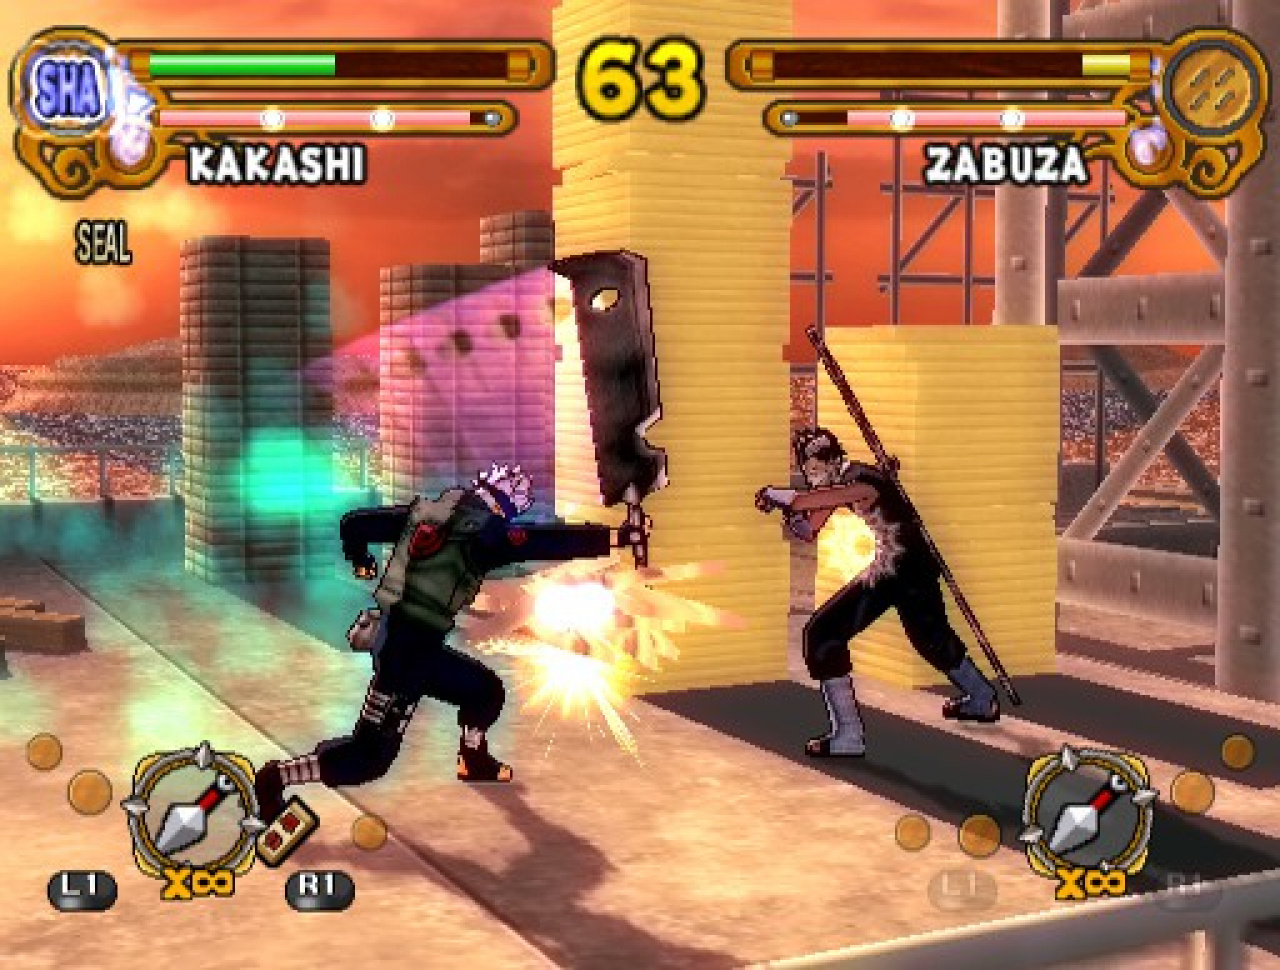 Naruto Shippuden Ultimate Ninja 5 PS2+Download (OnSite) in 2023